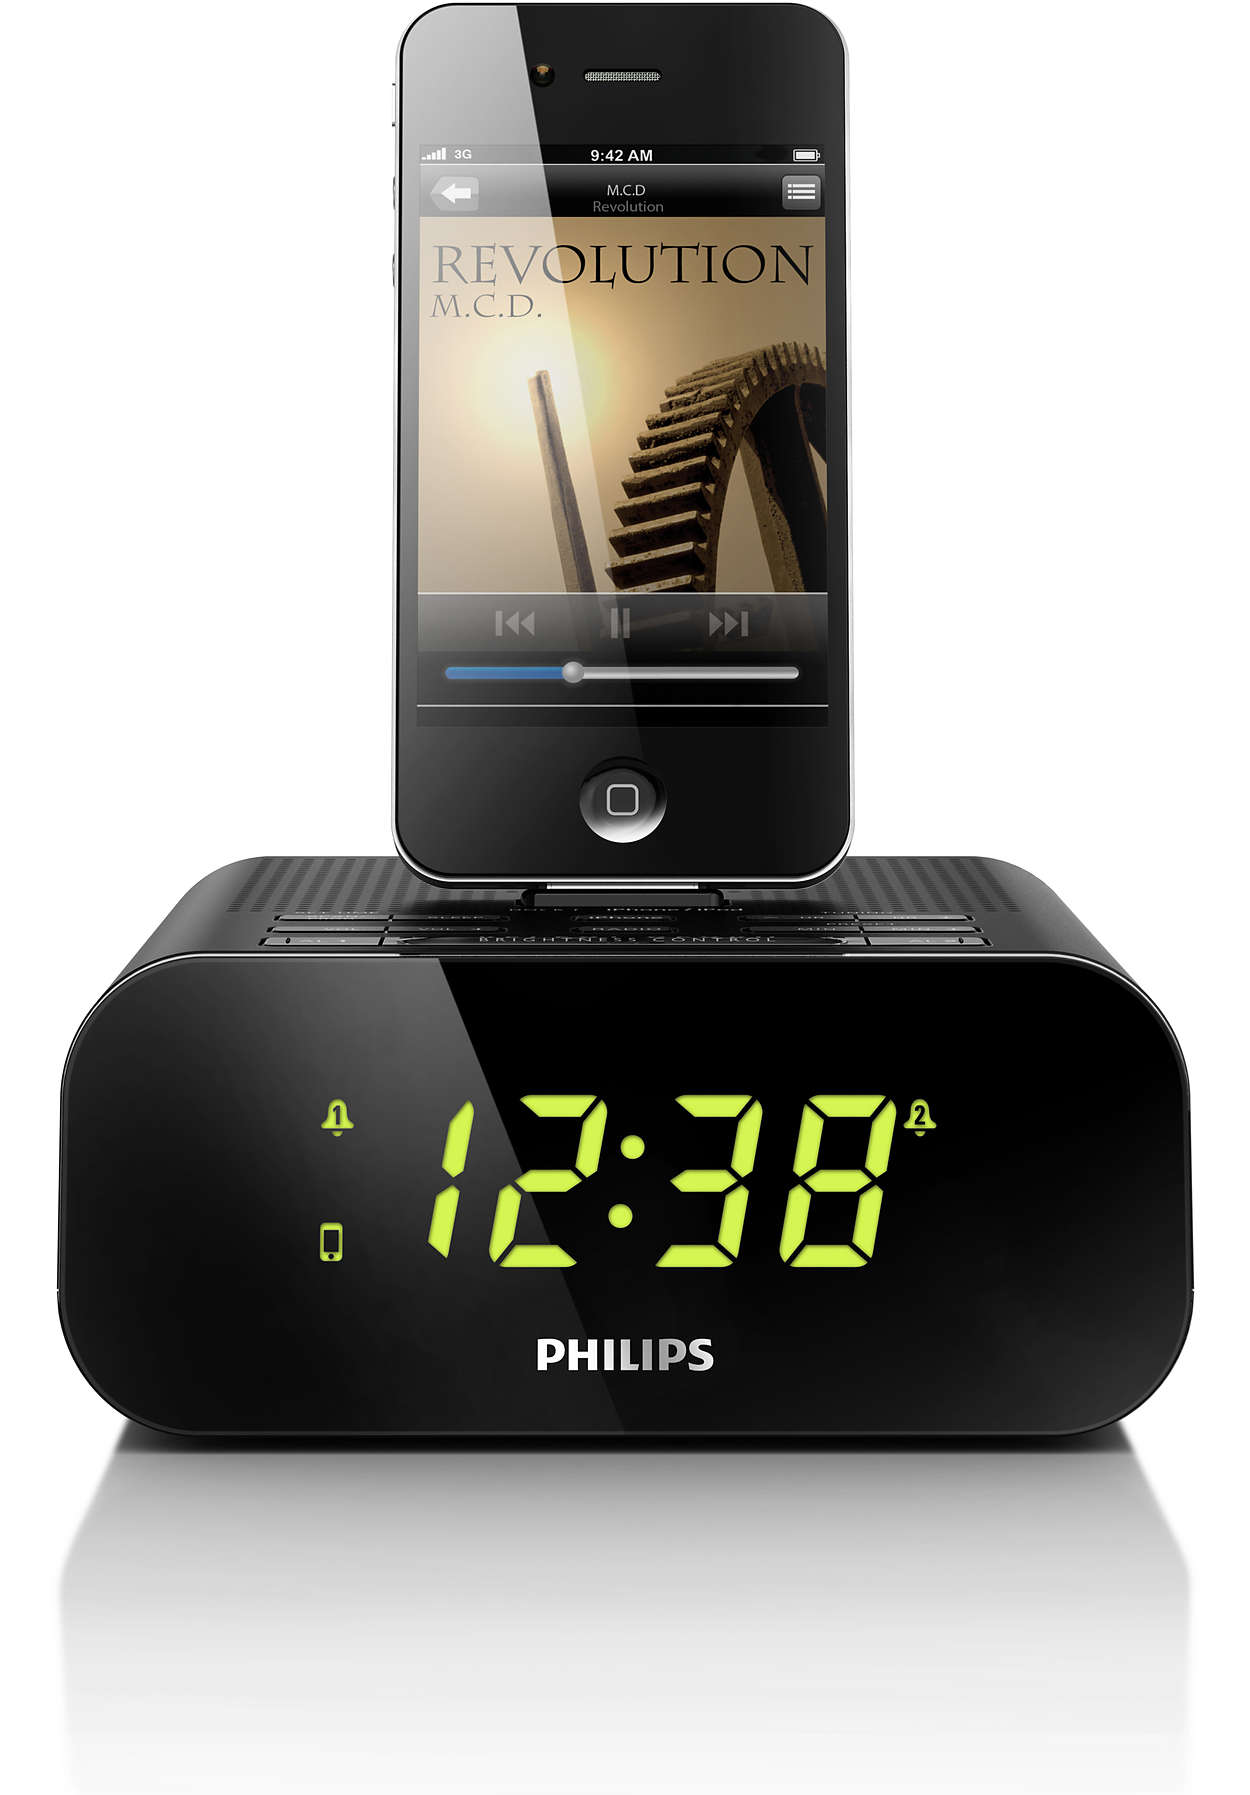 Bush iMode Clock Radio iPod Dock Silver alarm FM Tuner Snooze Aux In C 